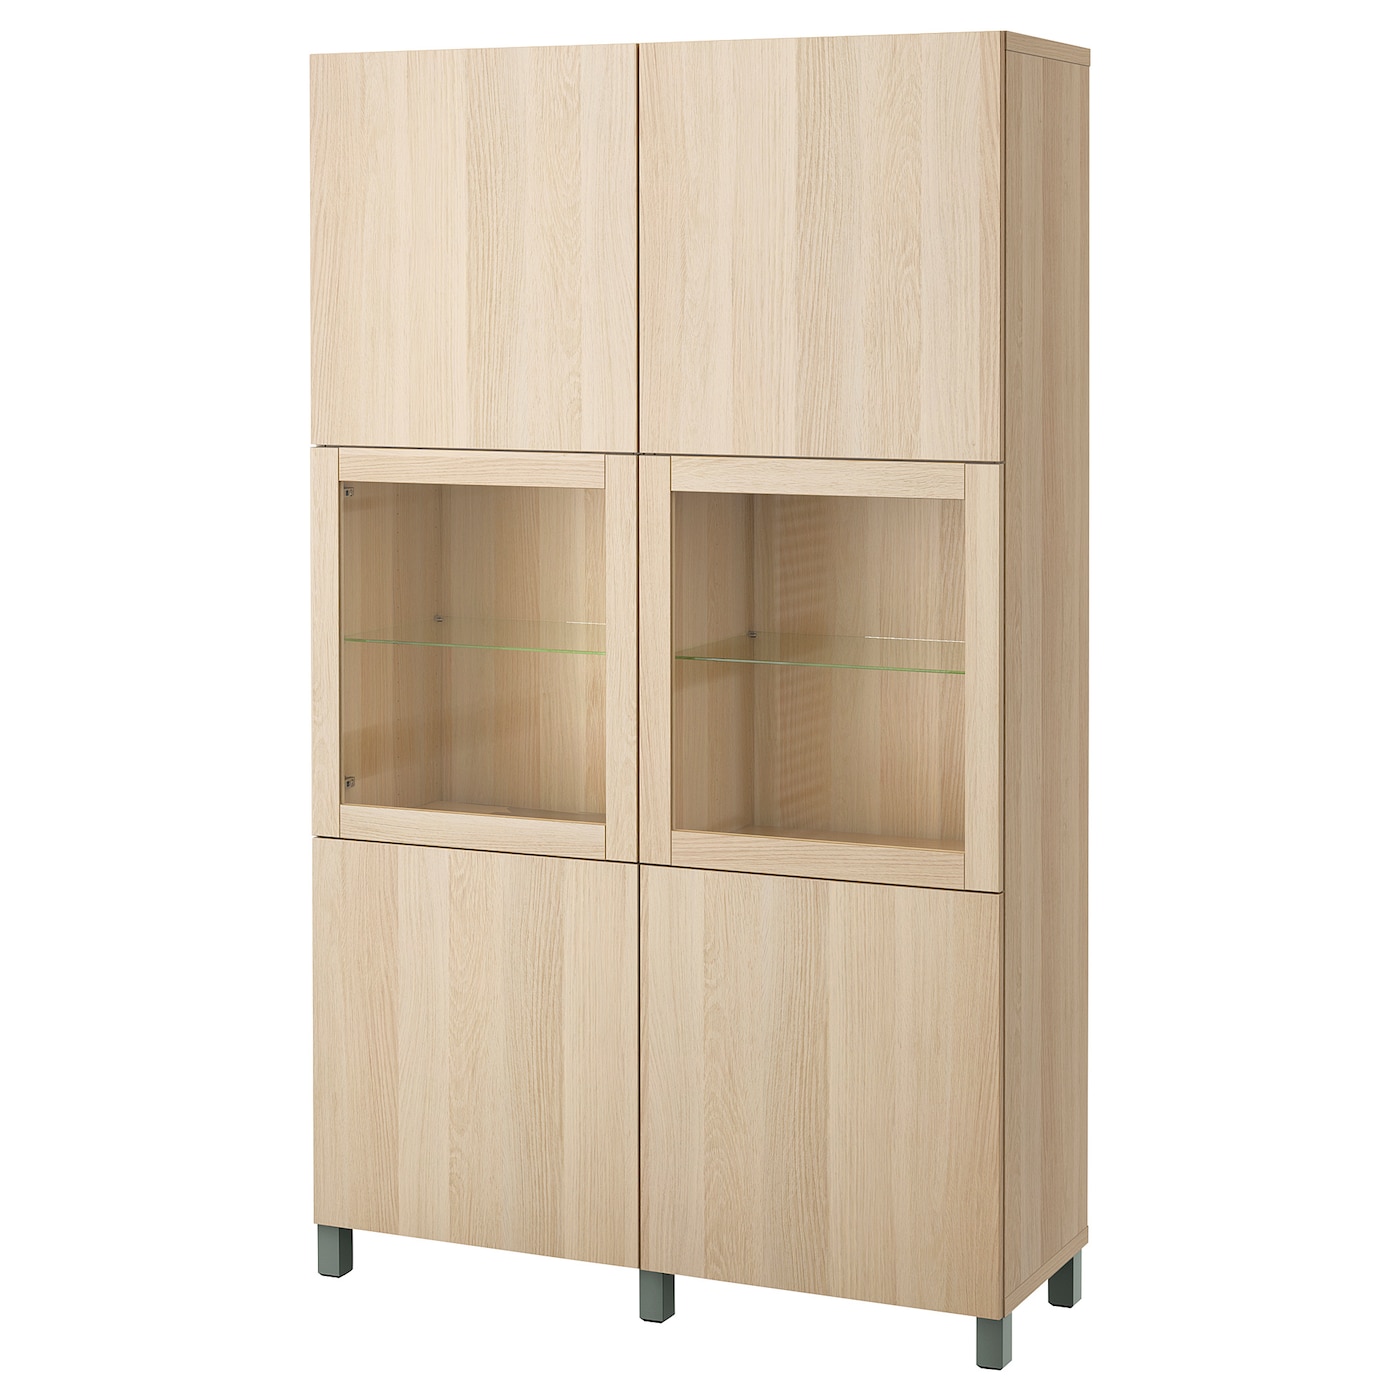 Книжный шкаф - BESTÅ/ BESTА IKEA/ БЕСТА/БЕСТО ИКЕА, 202х120 см, под беленый дуб